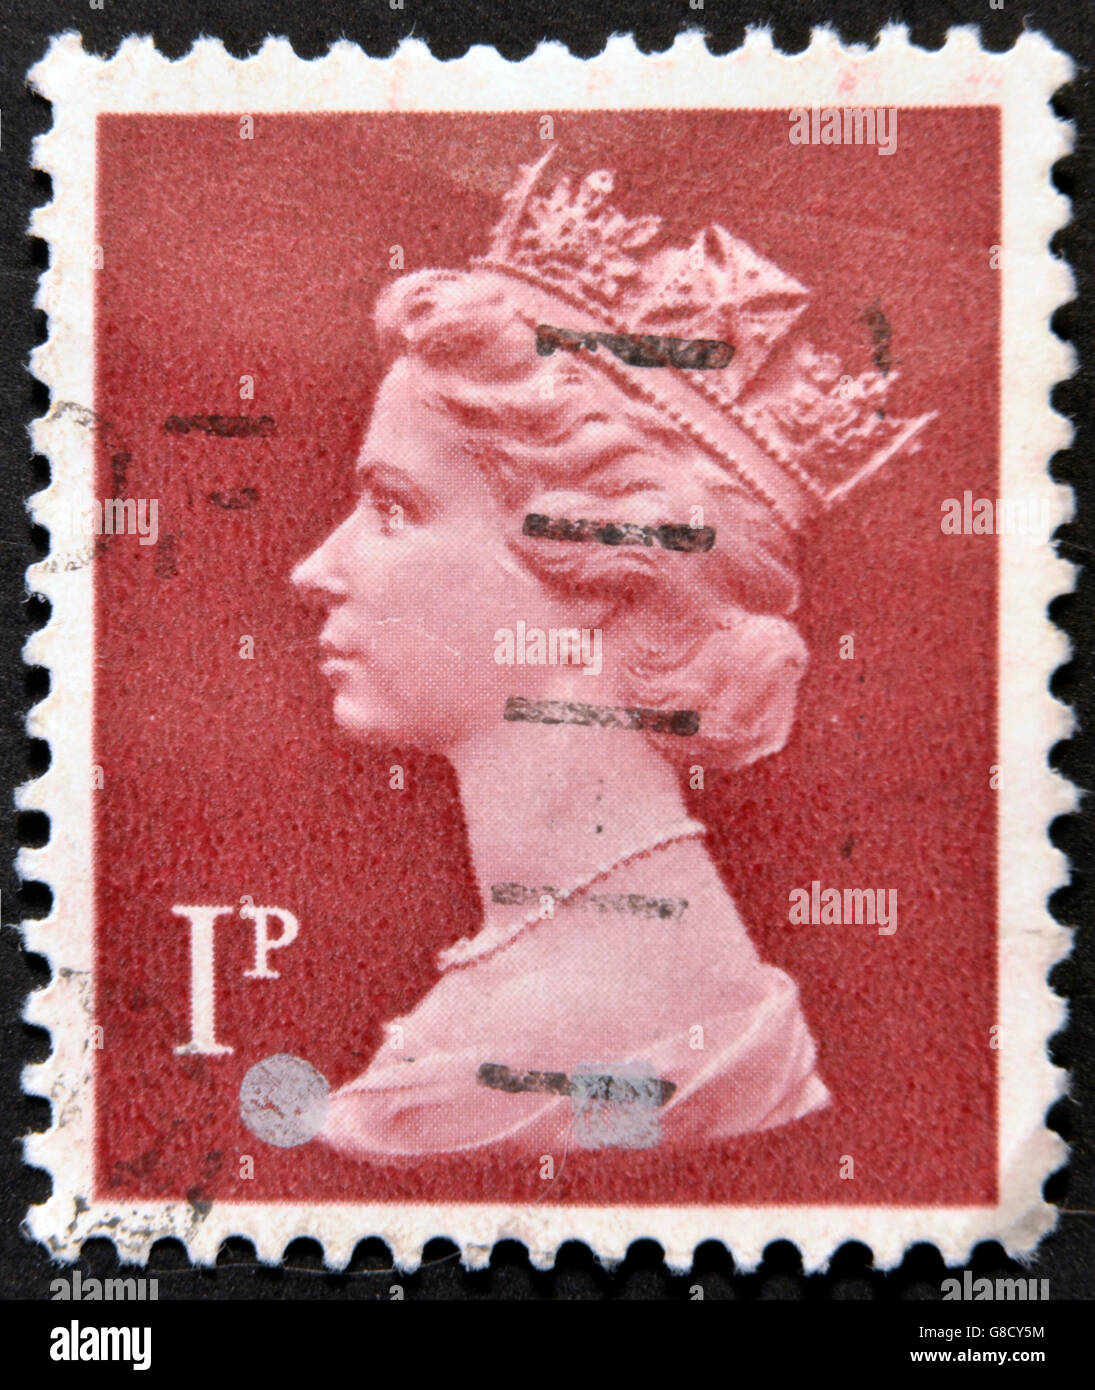 photo date stamp 1980